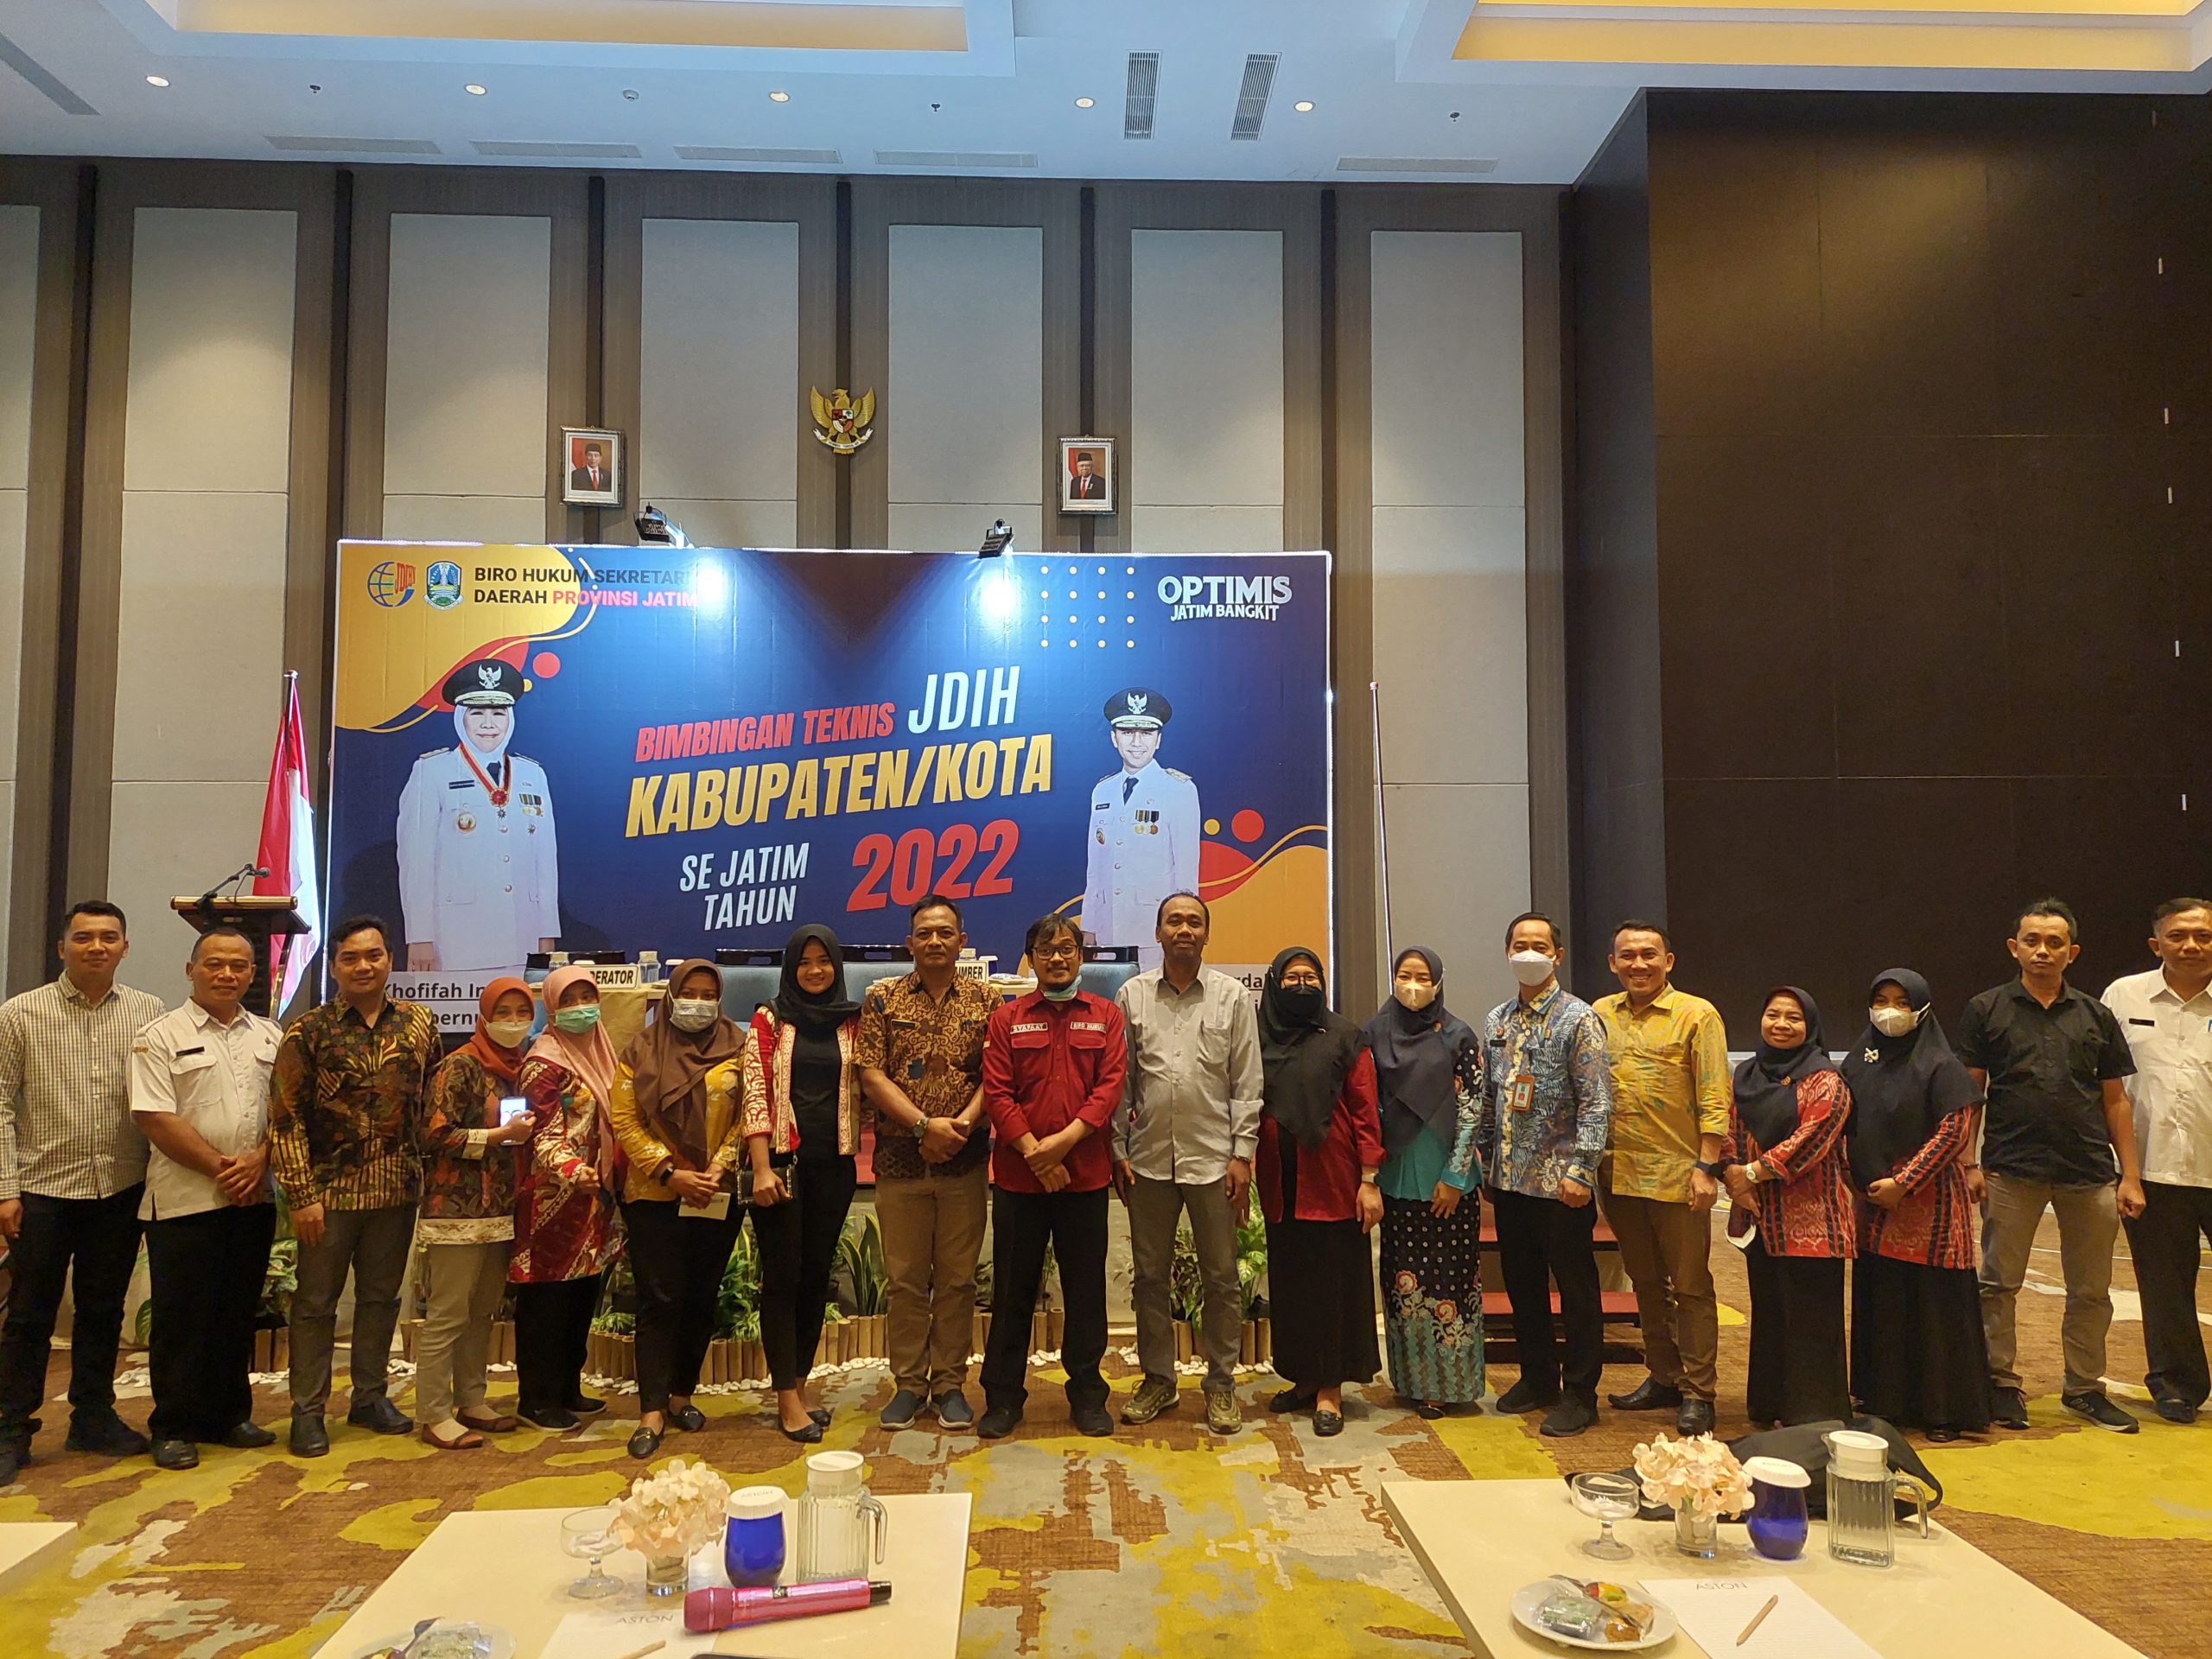 Bimbingan Teknis Jaringan Dokumentasi dan Informasi Hukum(JDIH) Kabupaten/Kota se Jawa Timur Tahun 2022